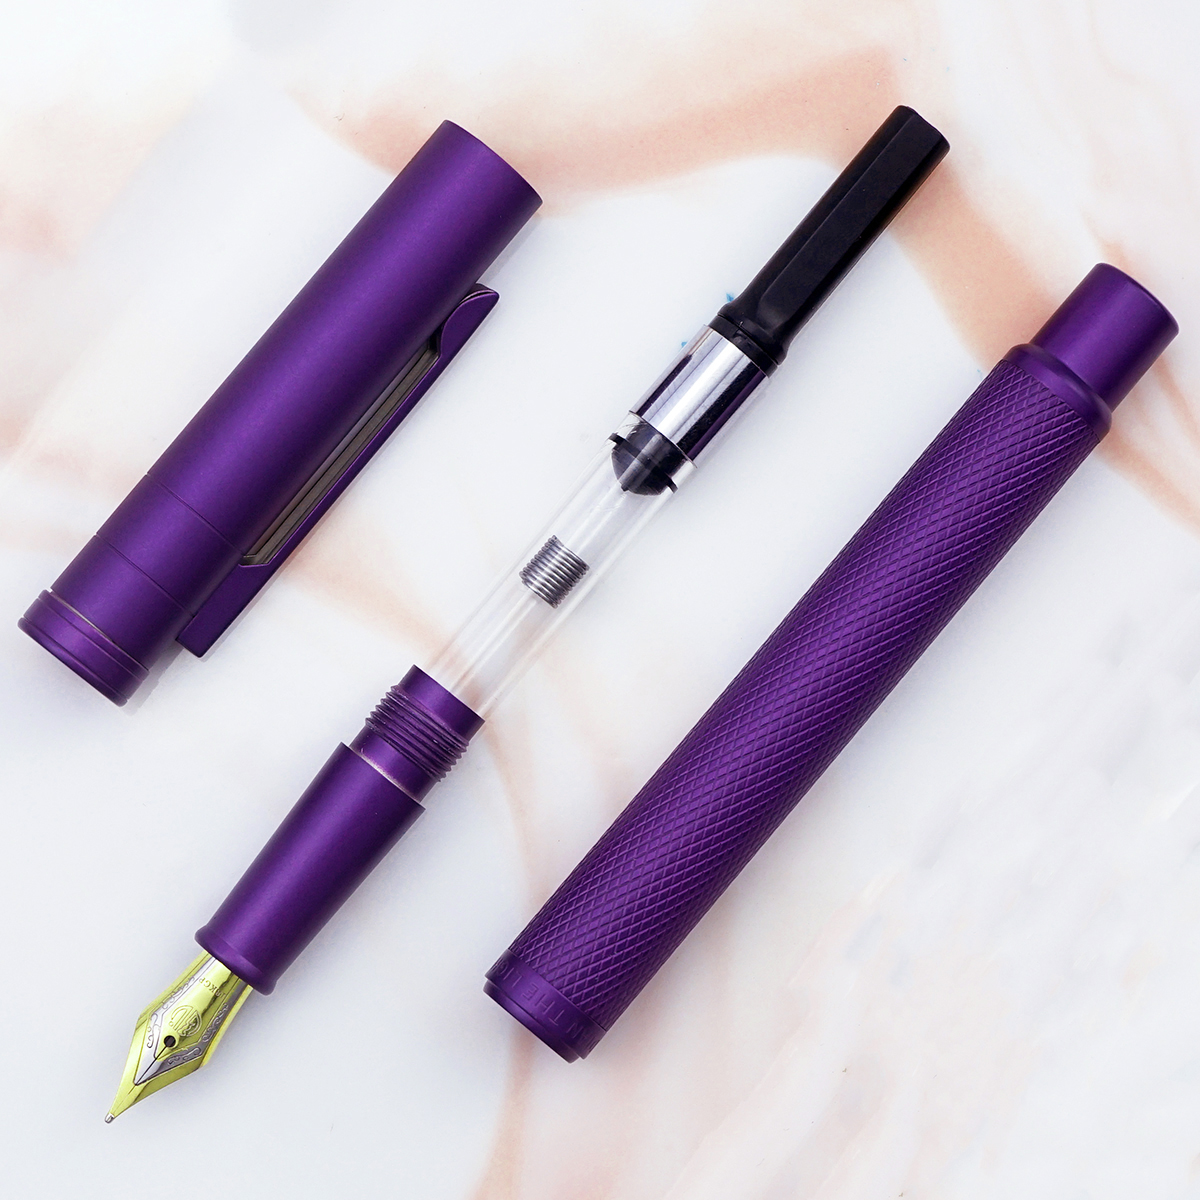 Hongdian Purple Forest Metal Fountain Pen Golden Nib EF/F/Bent Beautiful Tree Texture Excellent Writing Business Office Pen